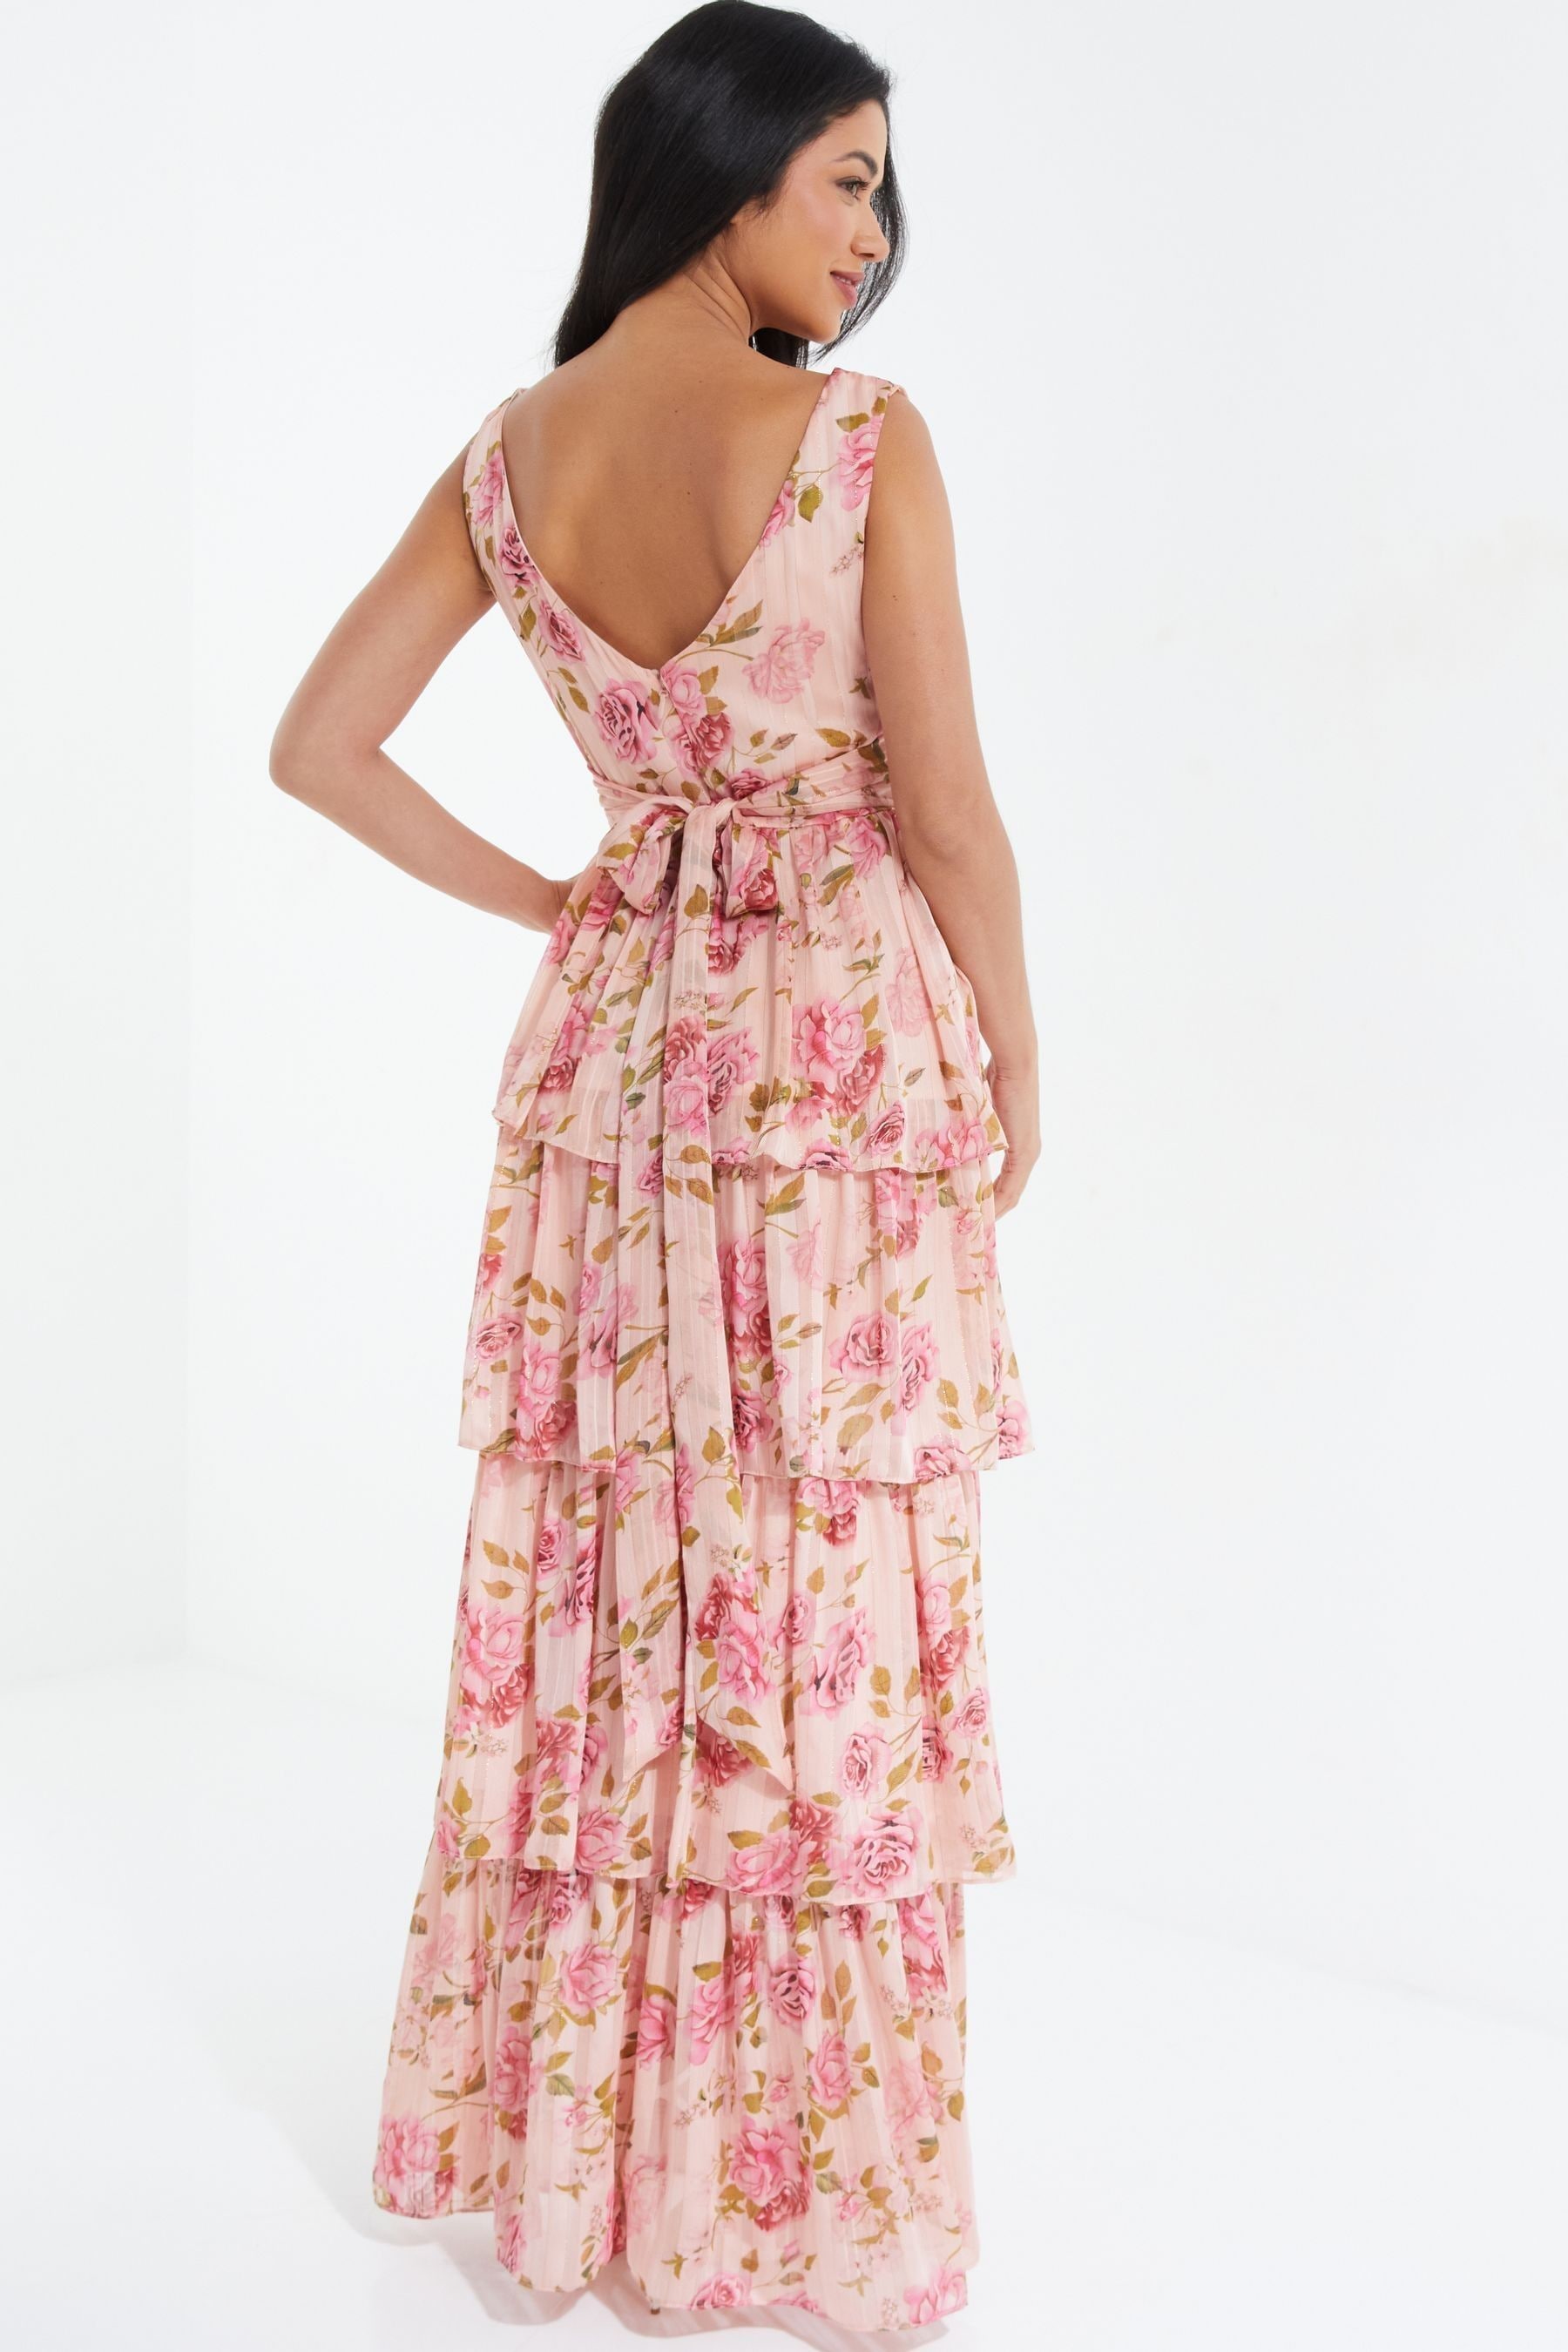 Buy Quiz Chiffon Floral Wrap Tiered Maxi Dress from Next Ireland